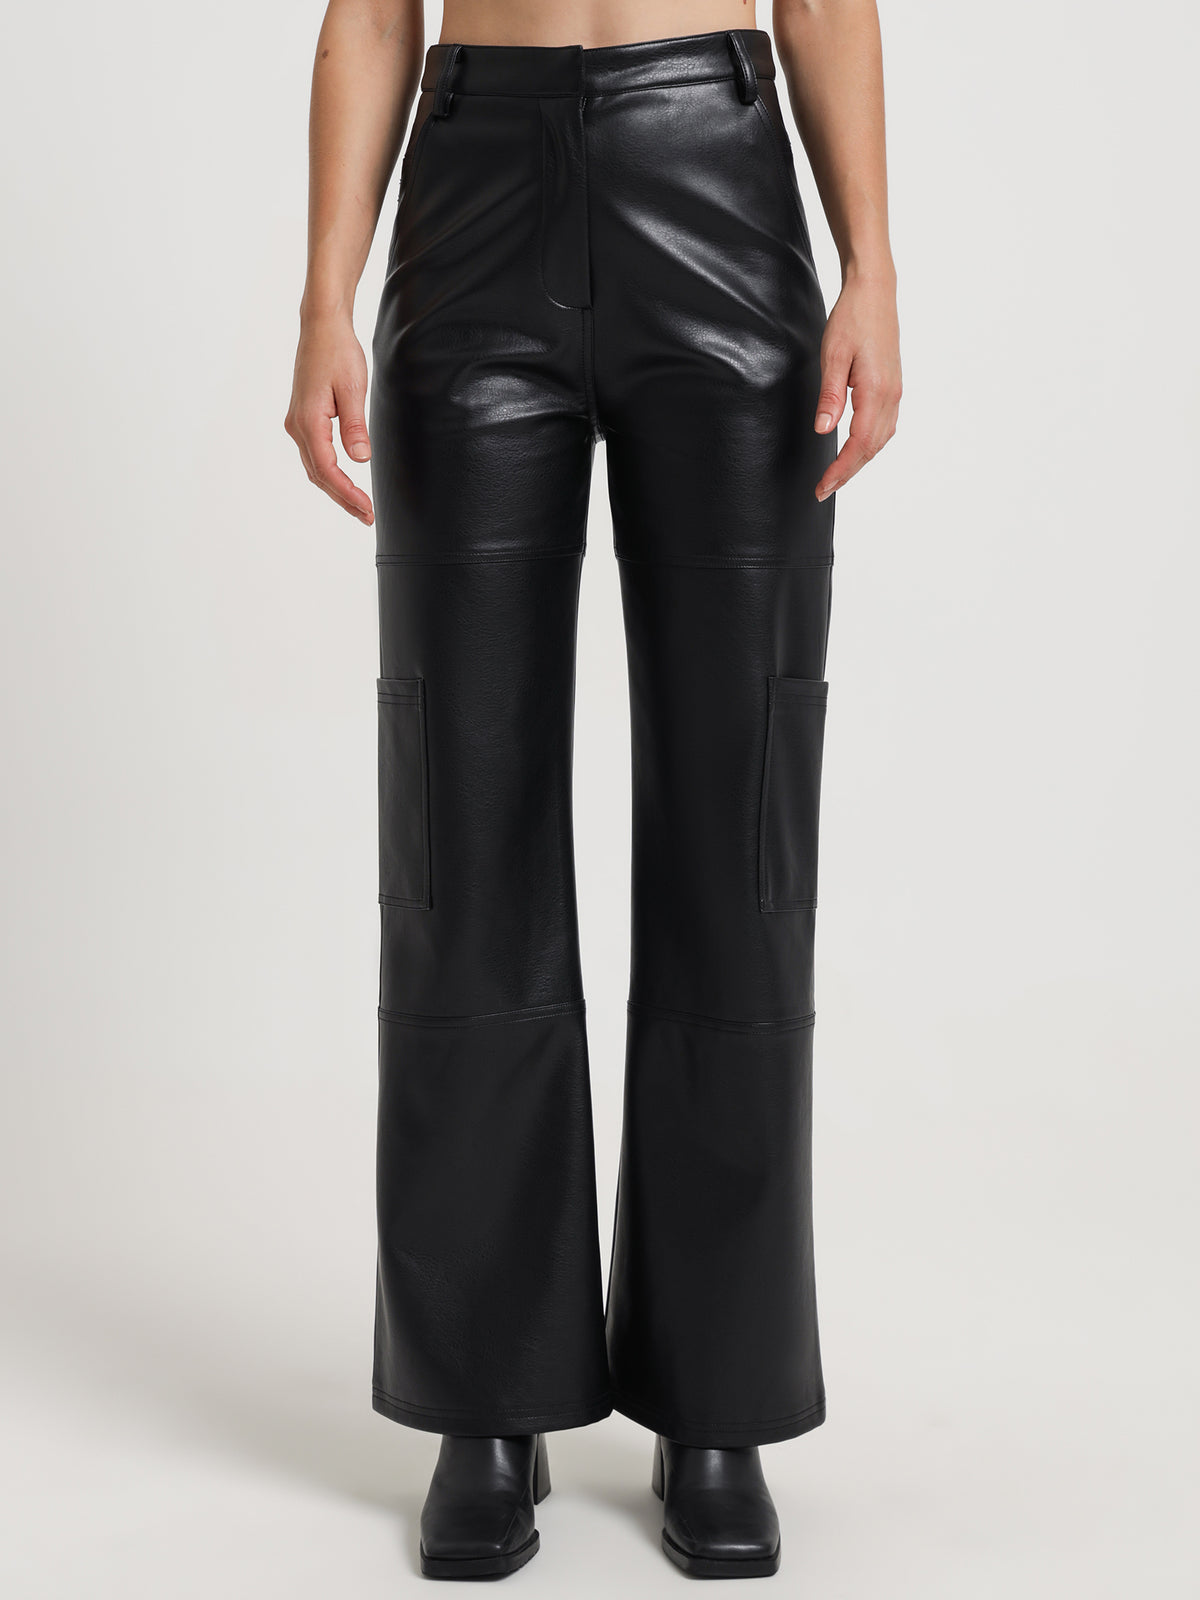 Zima Faux Leather Cargo Pants in Black